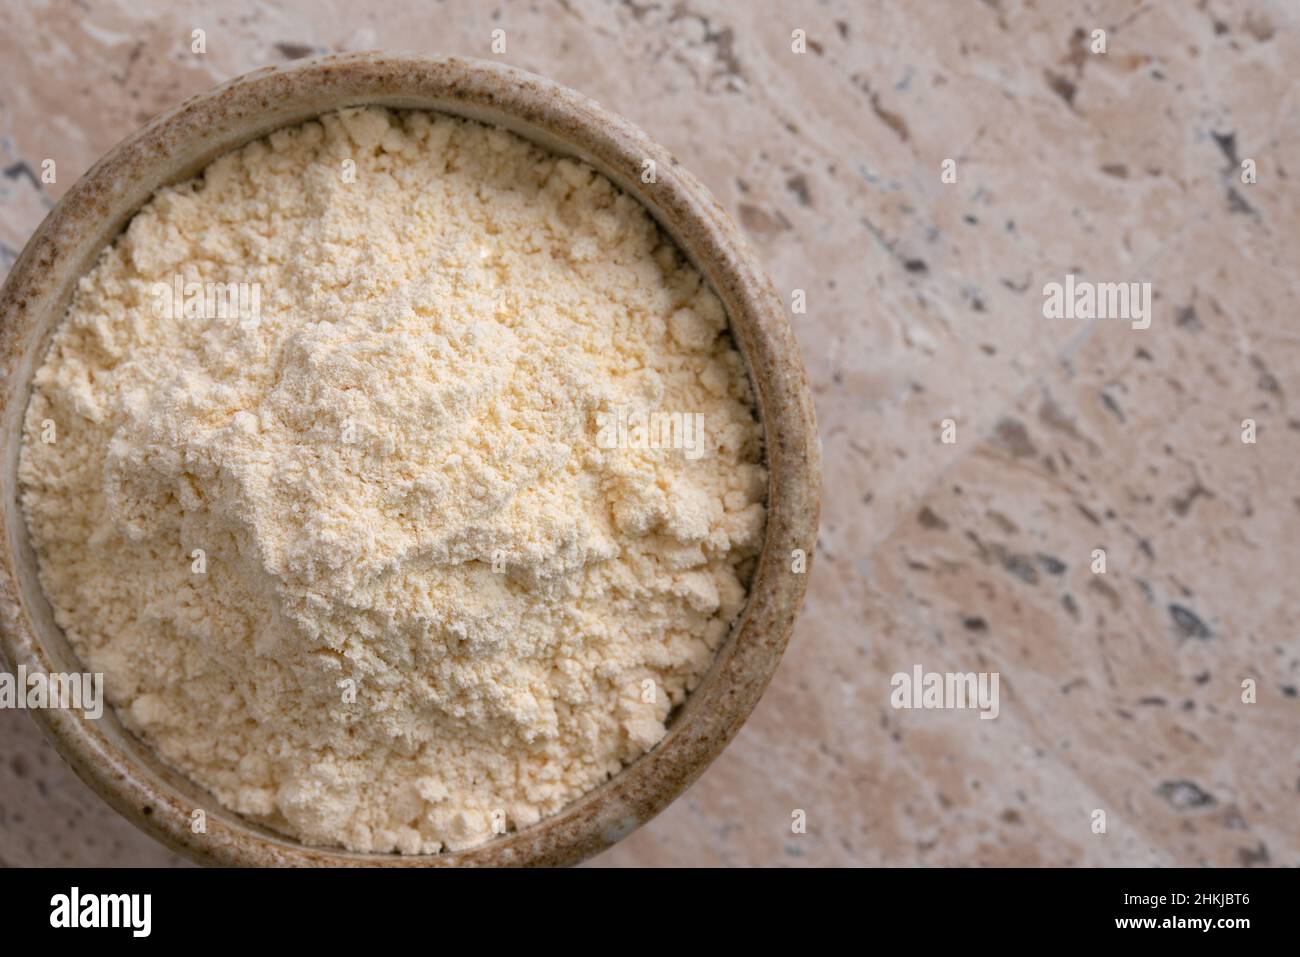 Garbanzo Bean Flour in a Bowl Stock Photo